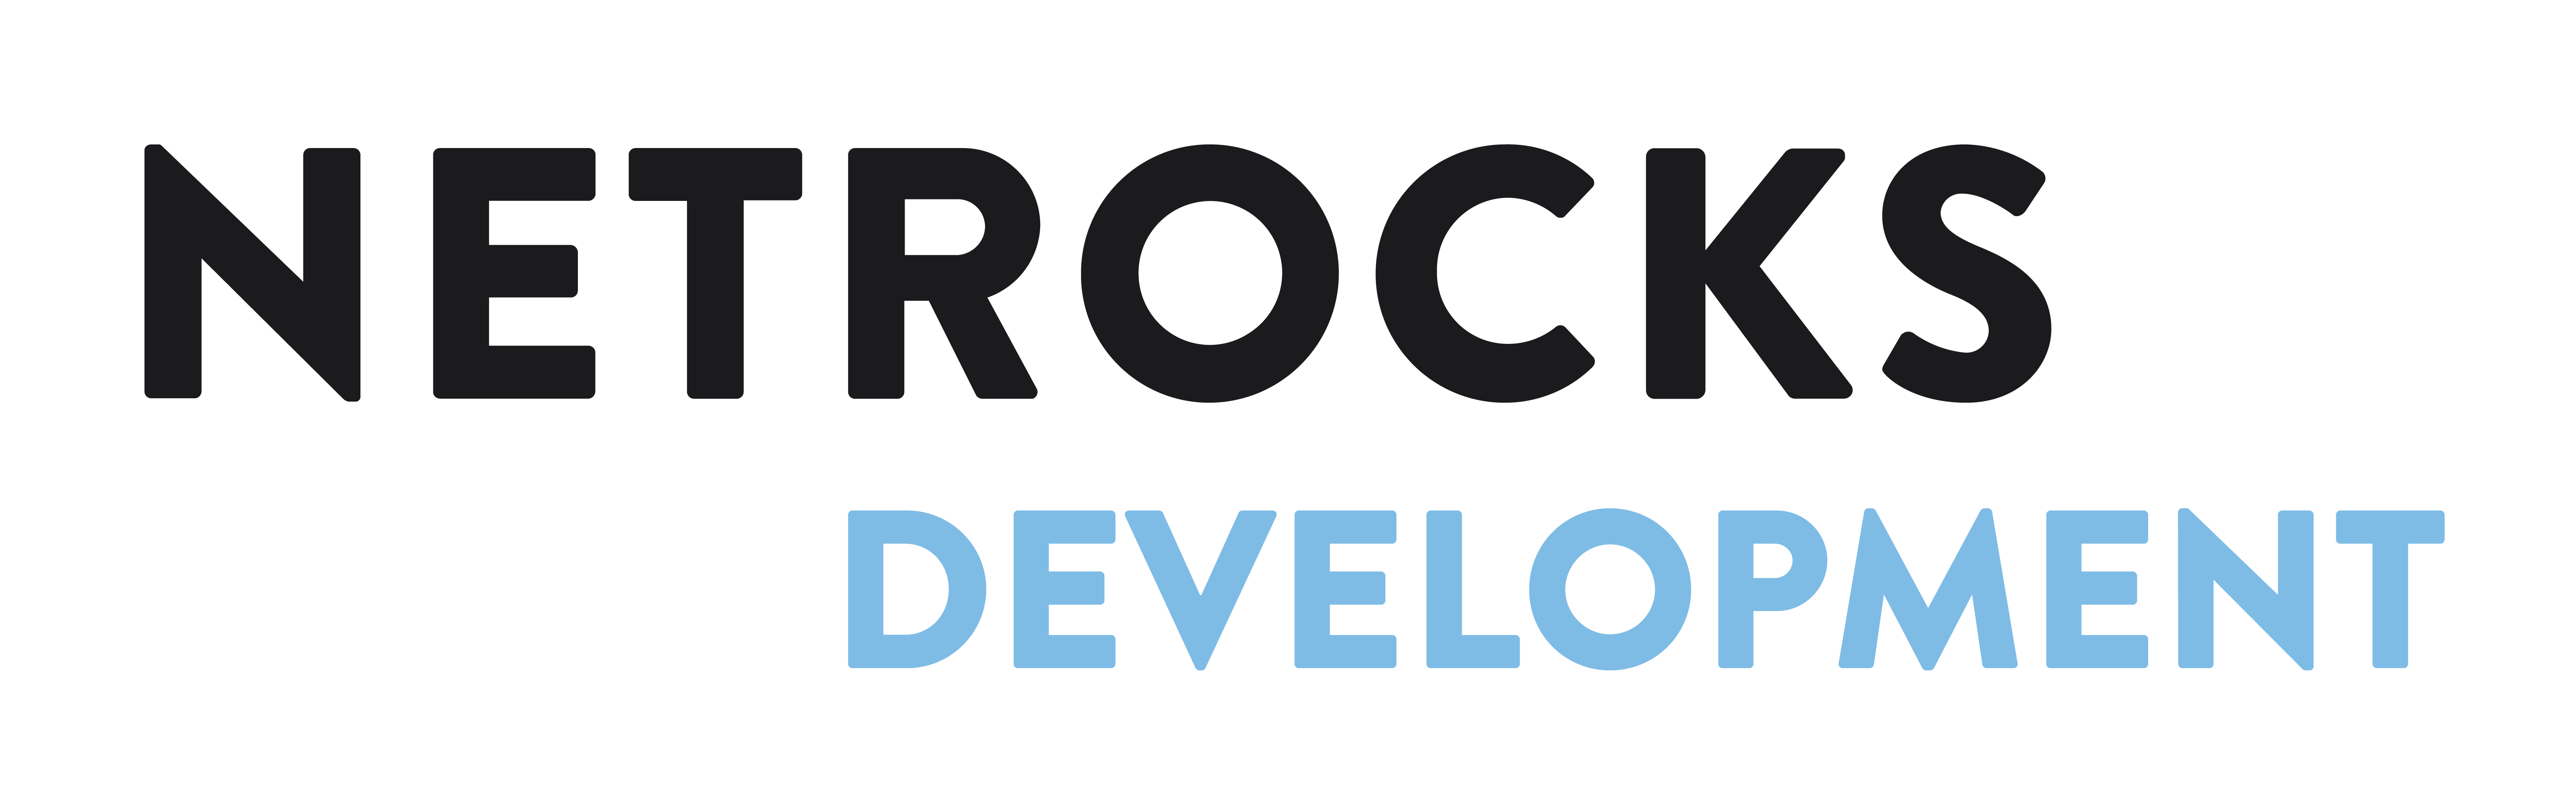 NetrocksDevelopment_Logo_RGB_positiv